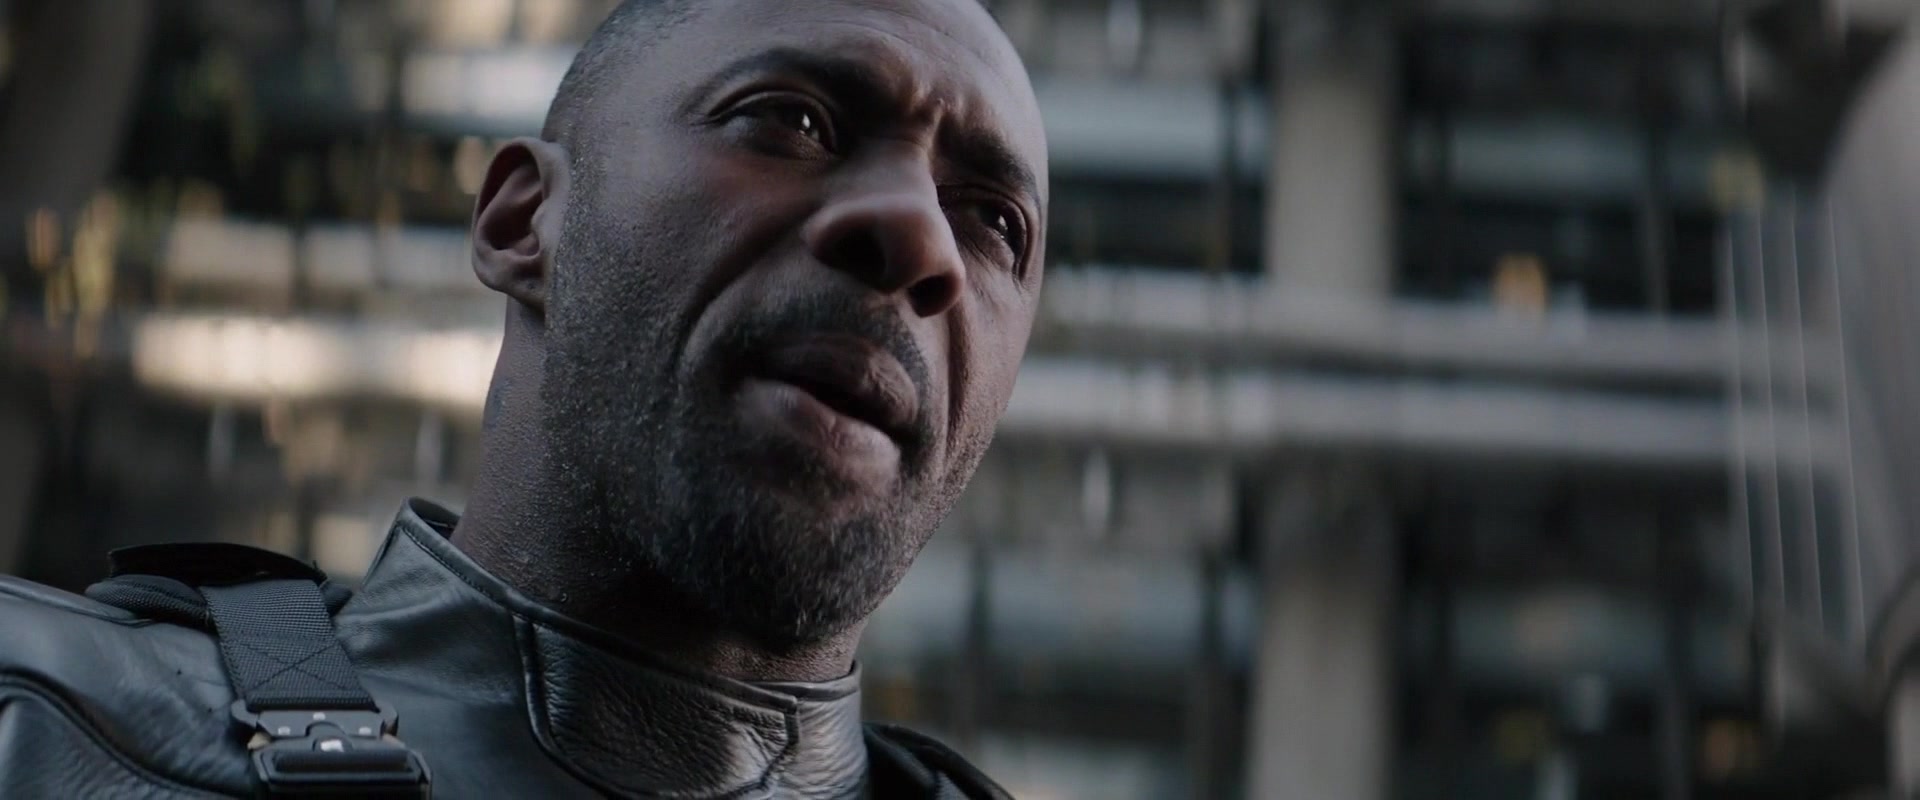 Brixton Lore (Idris Elba) taunts Deckard Shaw (Jason Statham) in Fast & Furious Presents: Hobbs & Shaw (2019), Universal Pictures